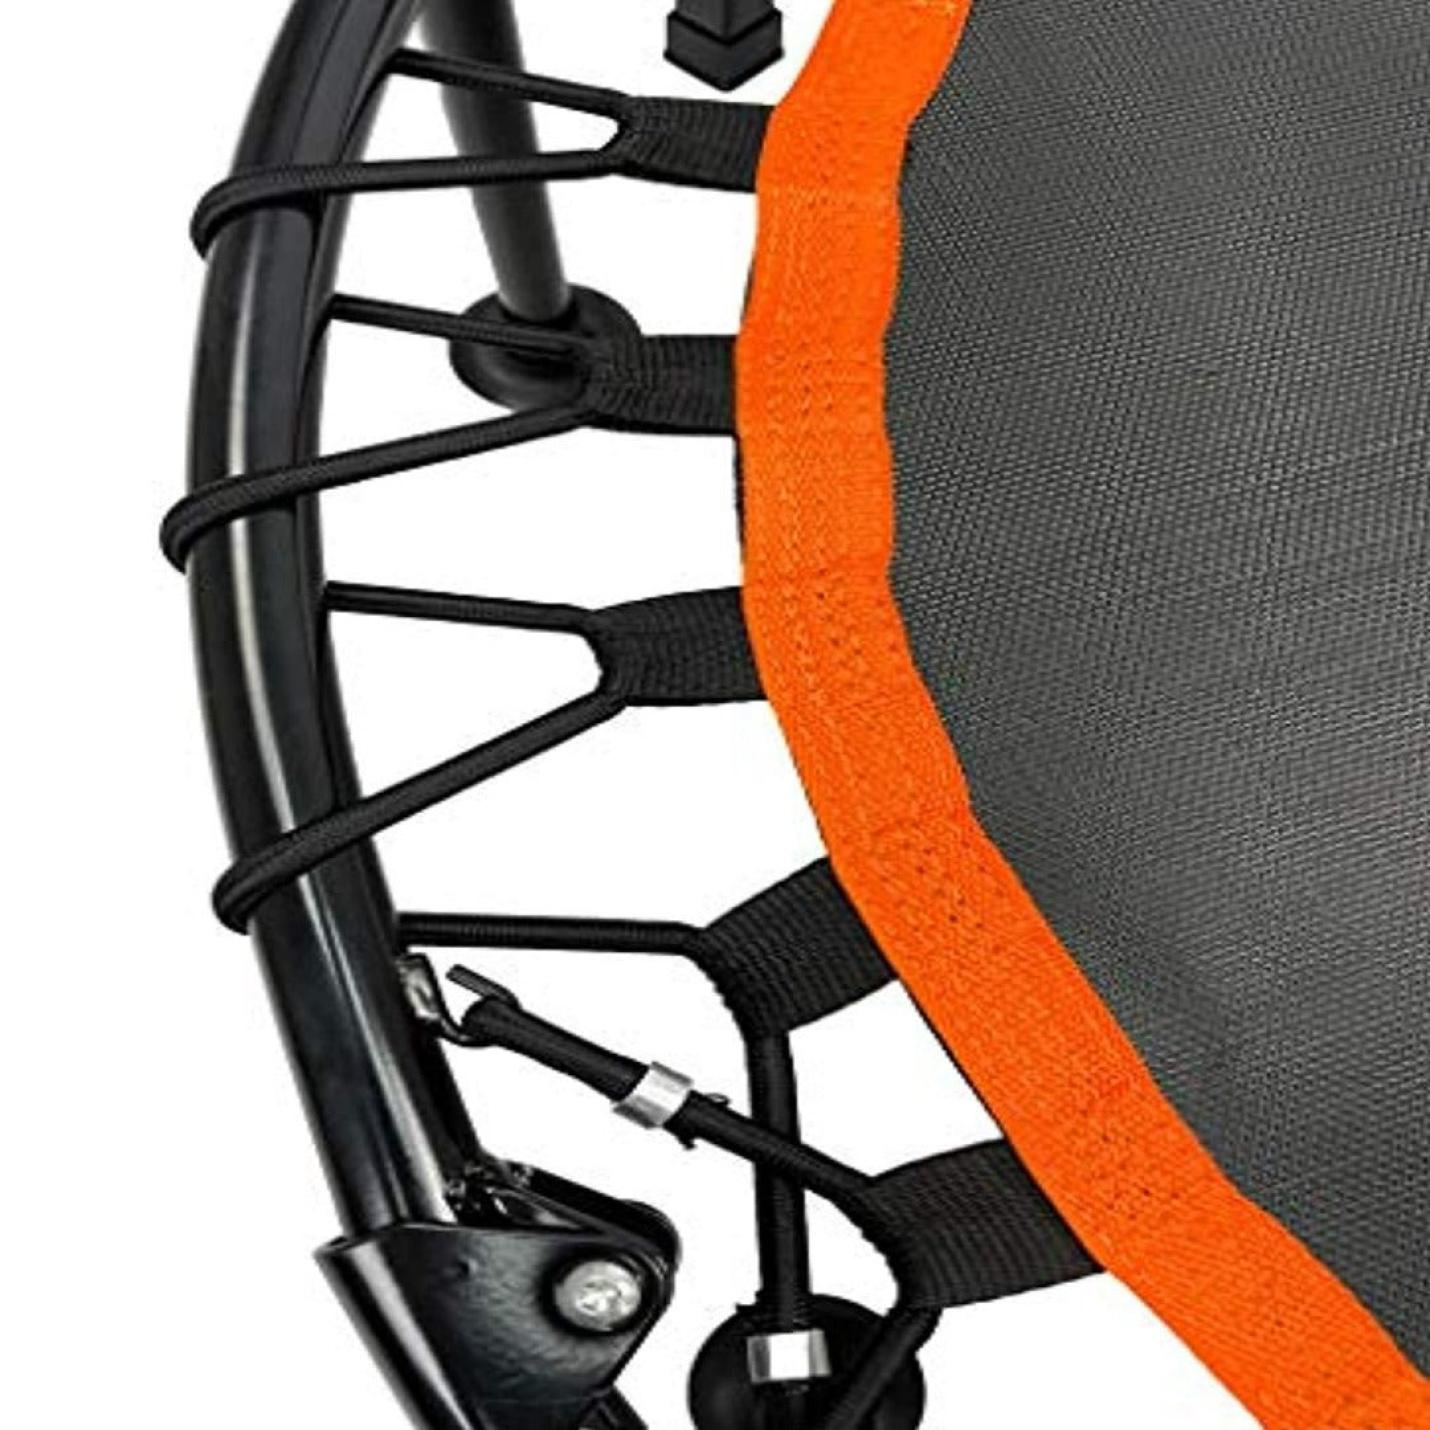 Bounce trampoline met maximale belastbaarheid van 130kg